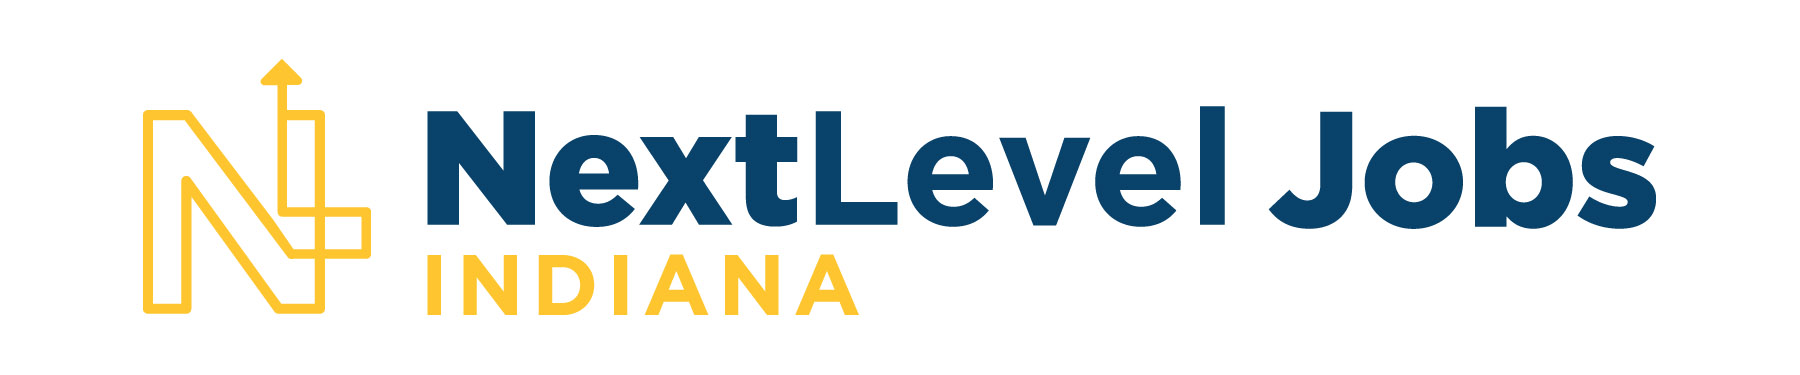 Next Level Jobs Indiana Logo 